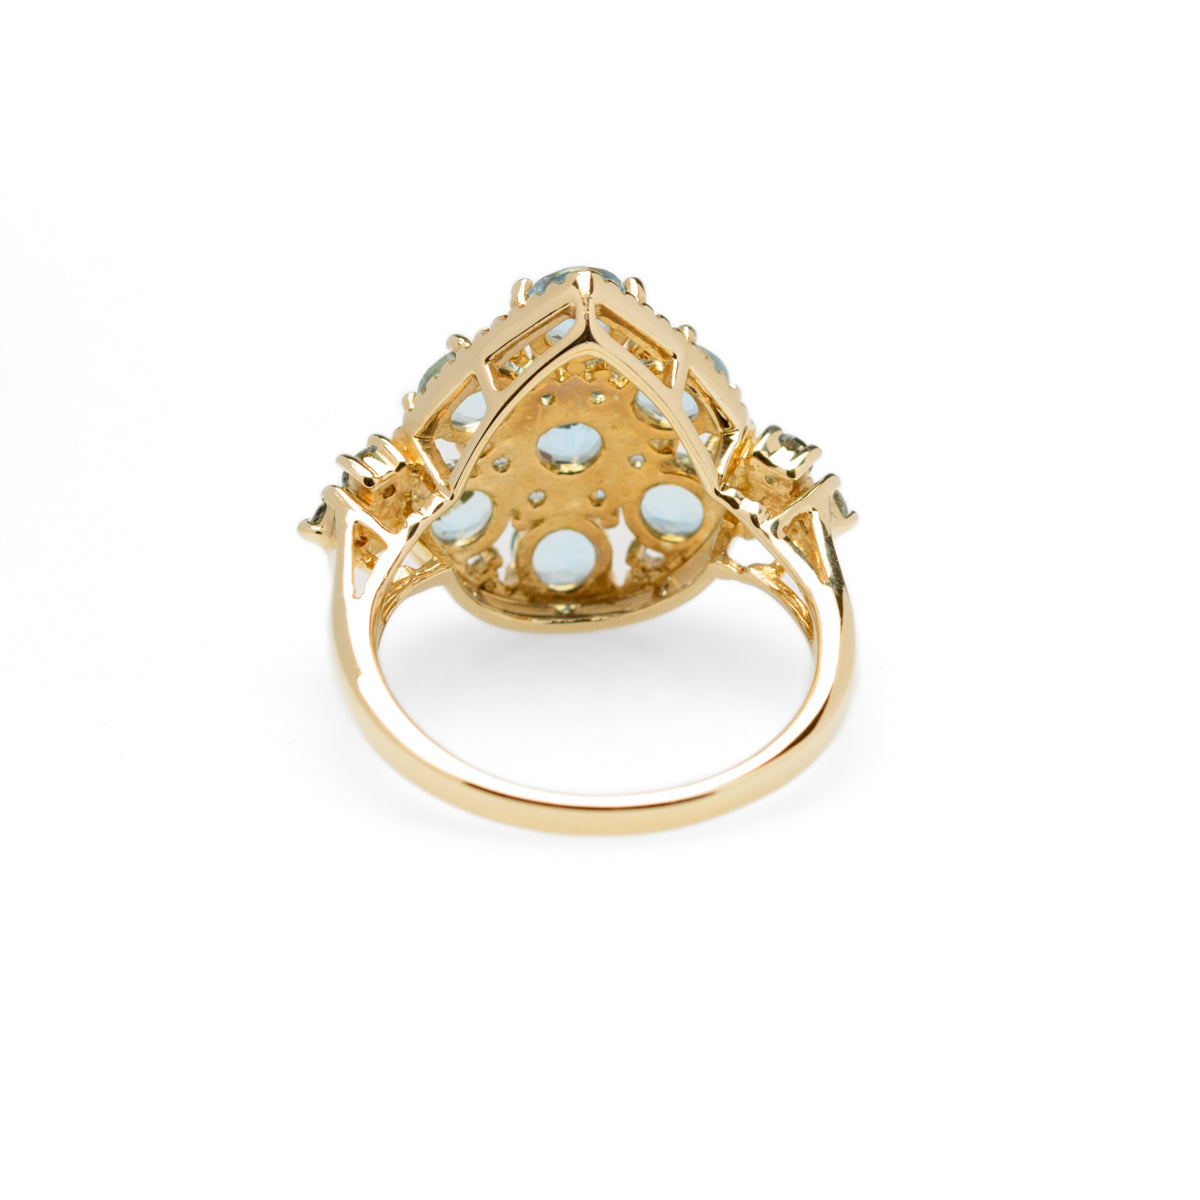 9ct Gold Cocktail Ring With Aquamarines & Diamonds In Teardrop Mount Birmingham Hallmark 2008 (Code A956)